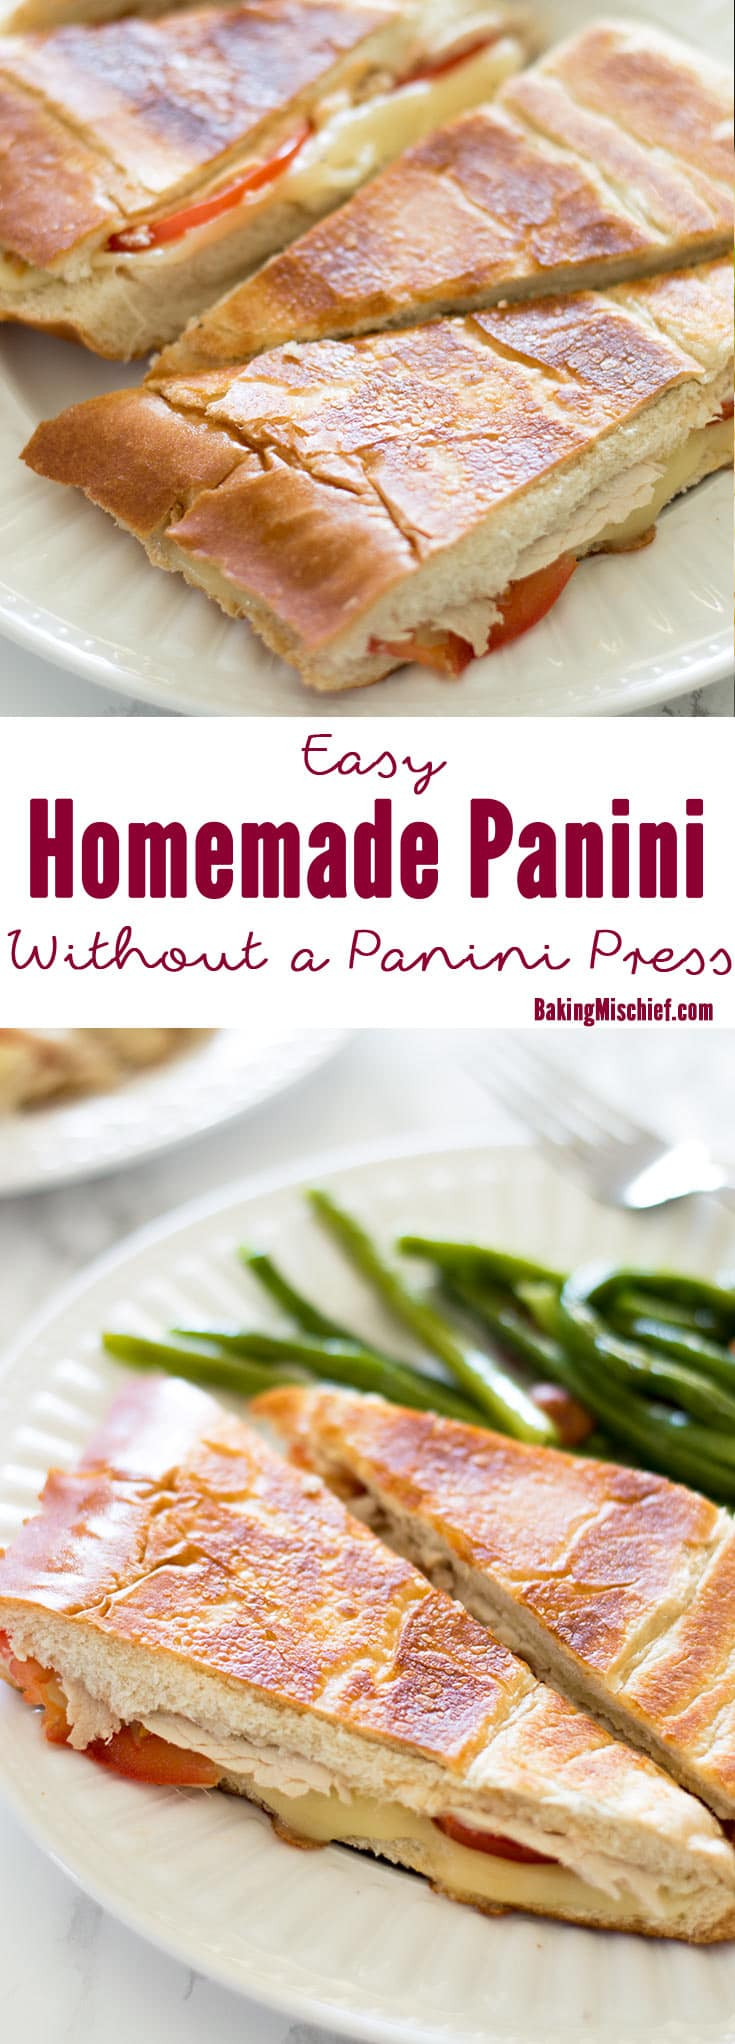 Panini Recipes Books
 Easy Homemade Panini Without a Panini Press